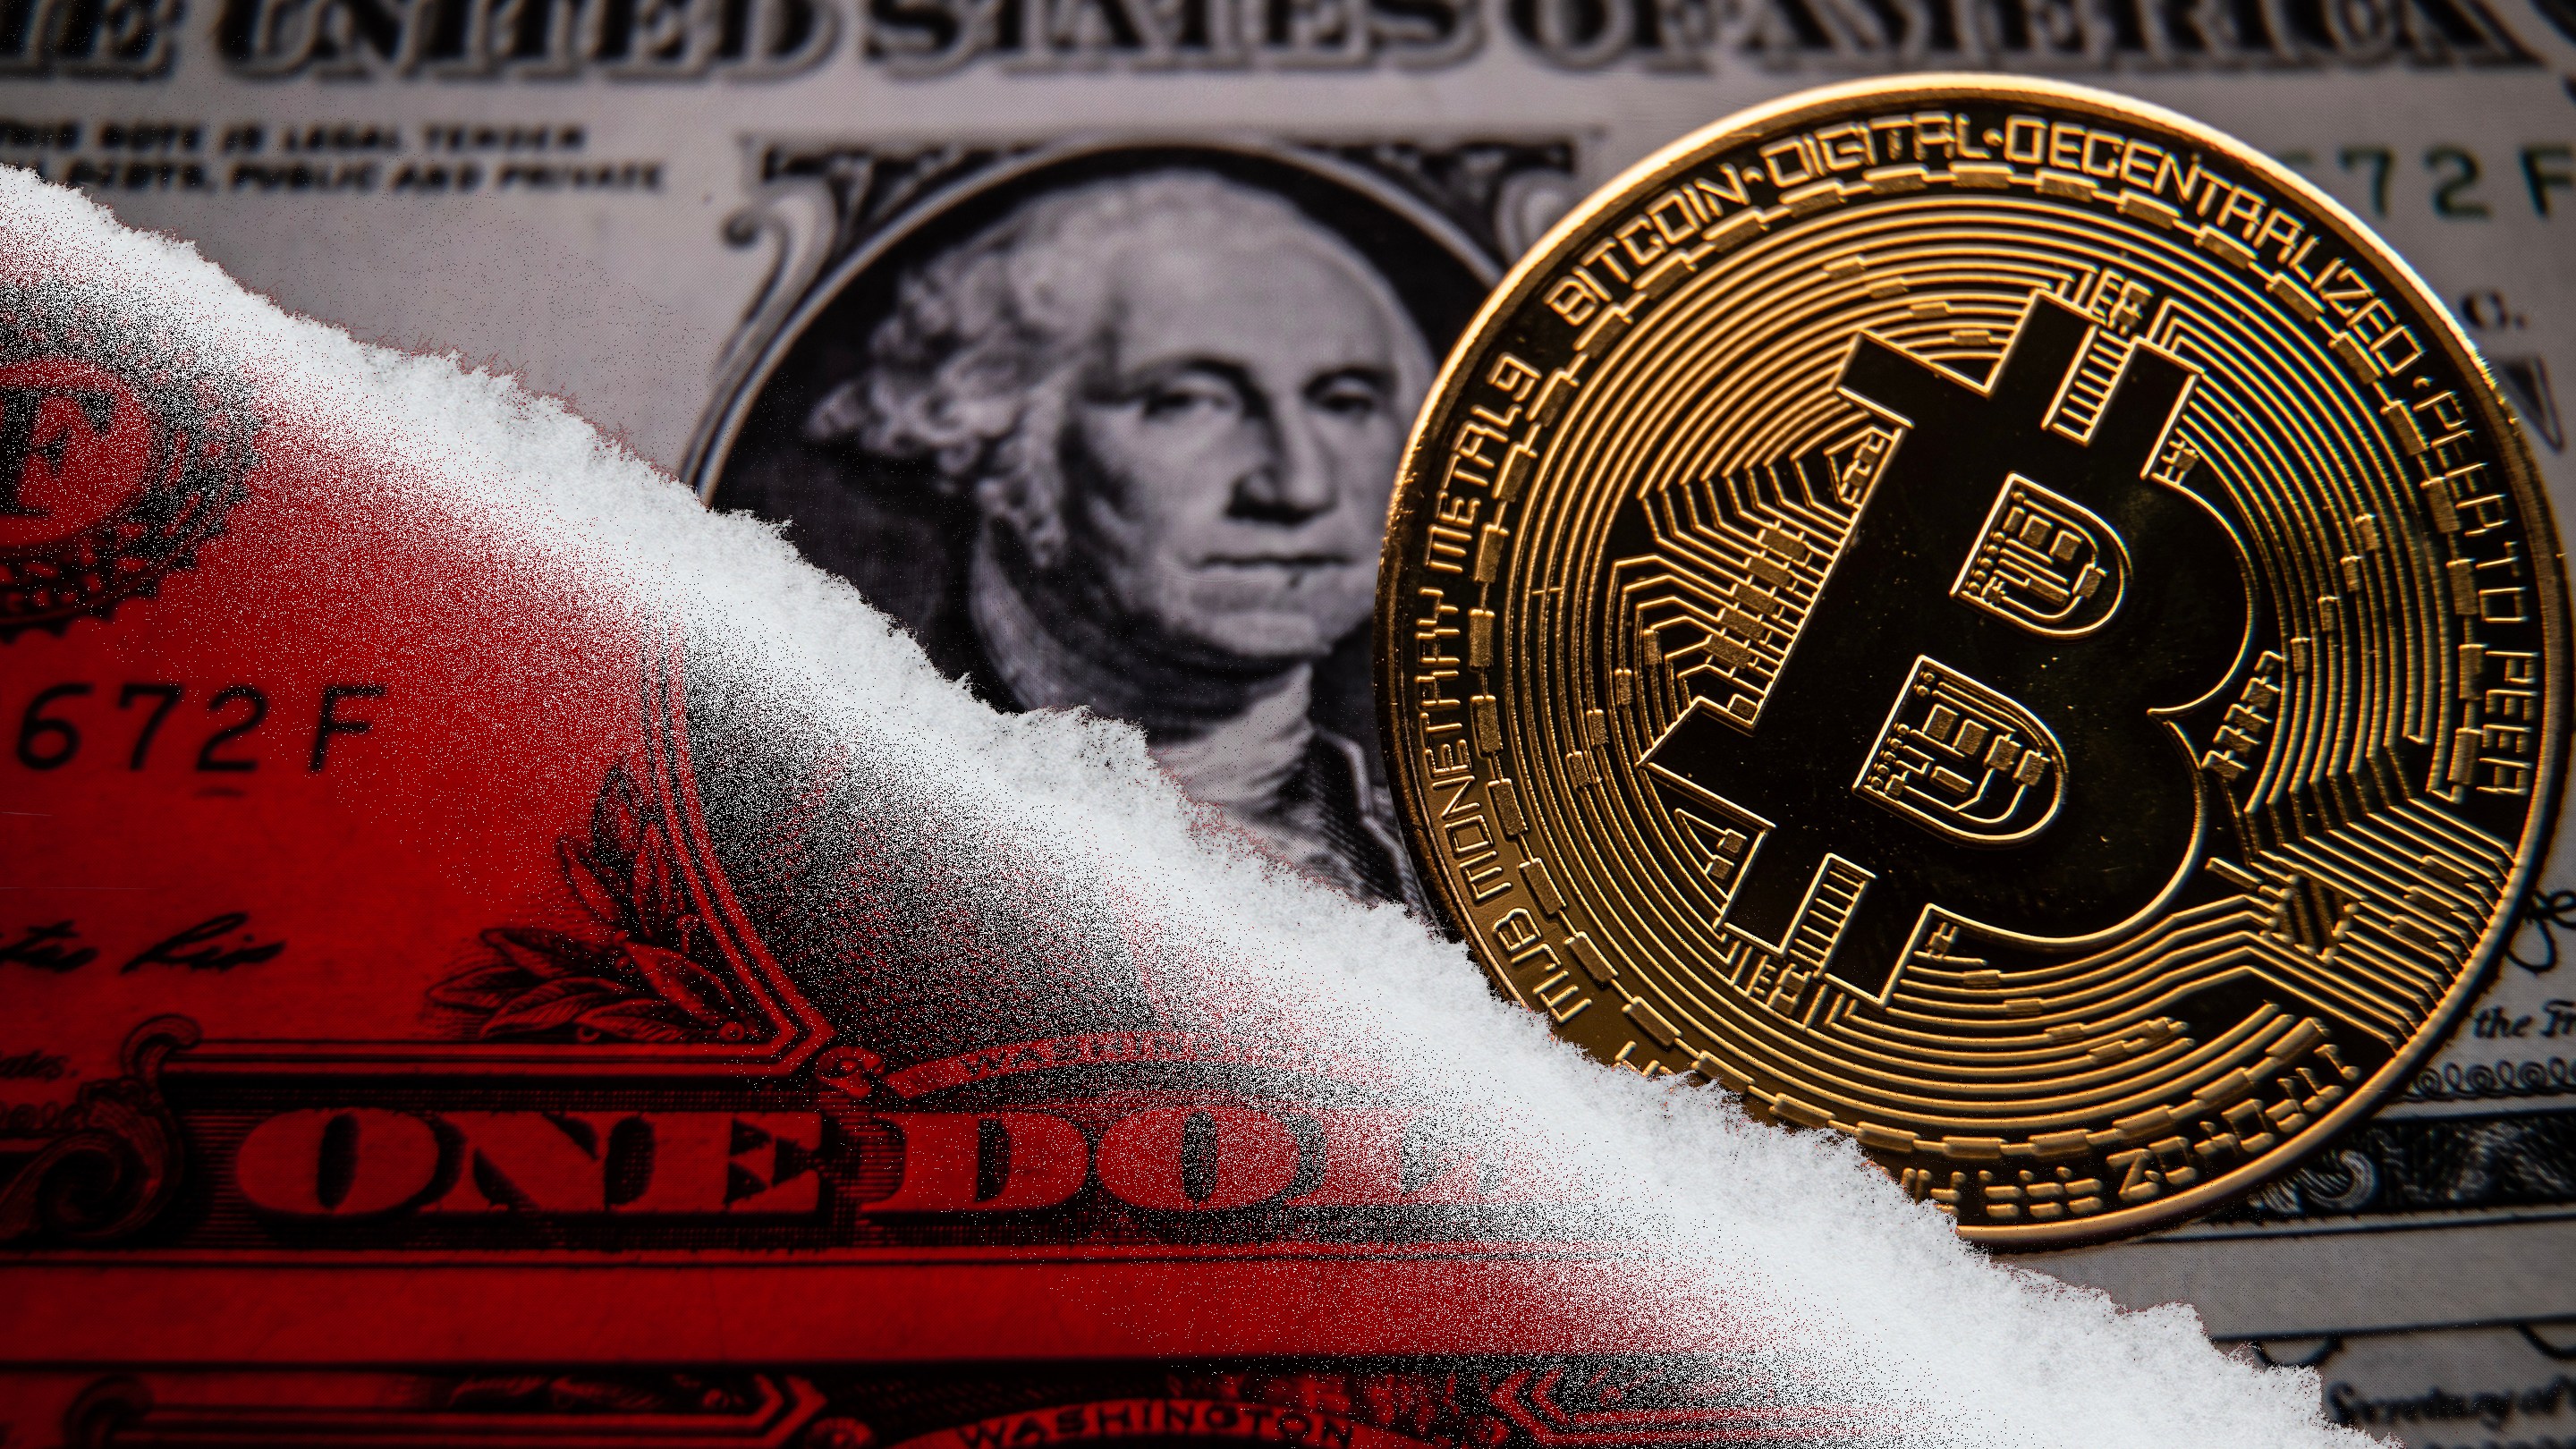 Why Do We Get Extreme Bitcoin Price Drops? | CoinMarketCap